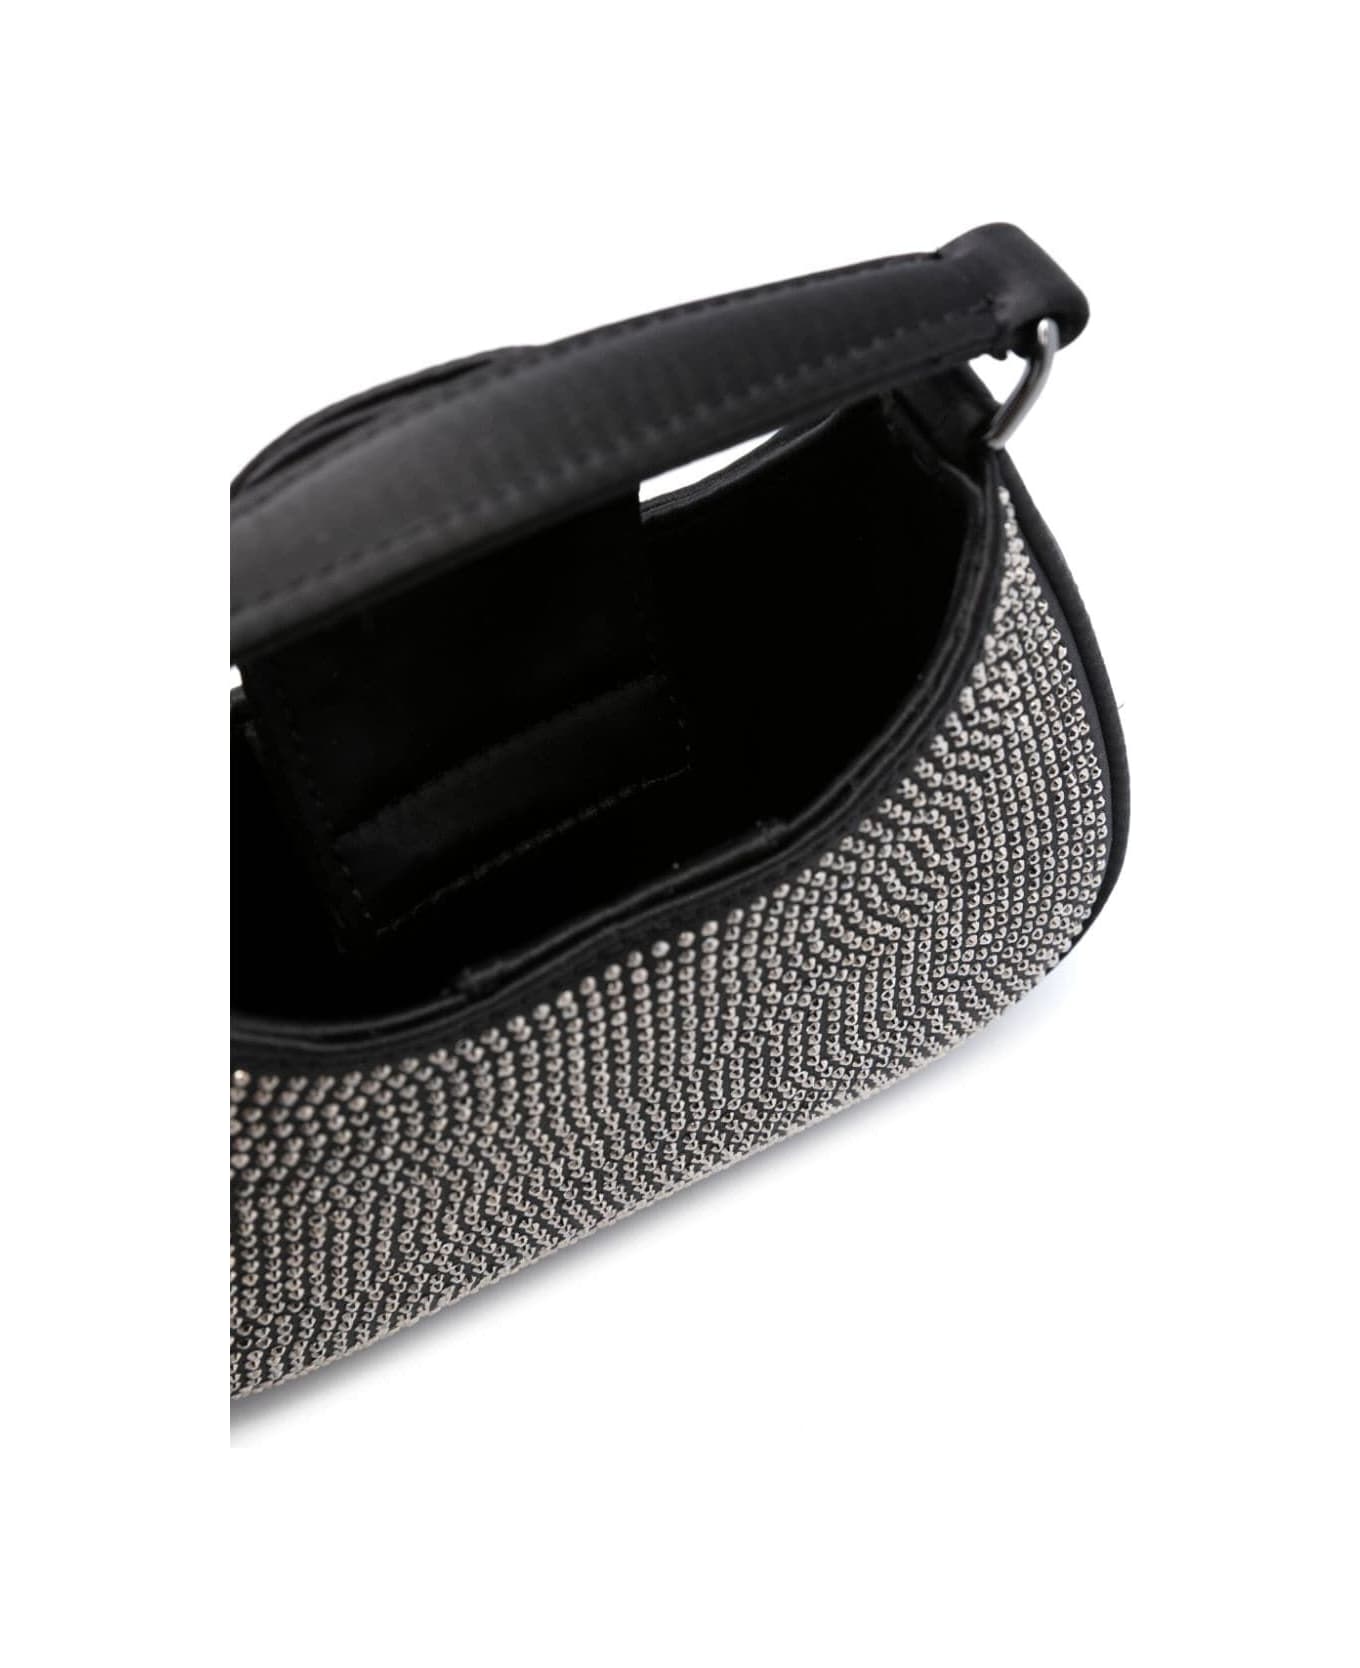 Emporio Armani Mini Shoulder Bag - Black